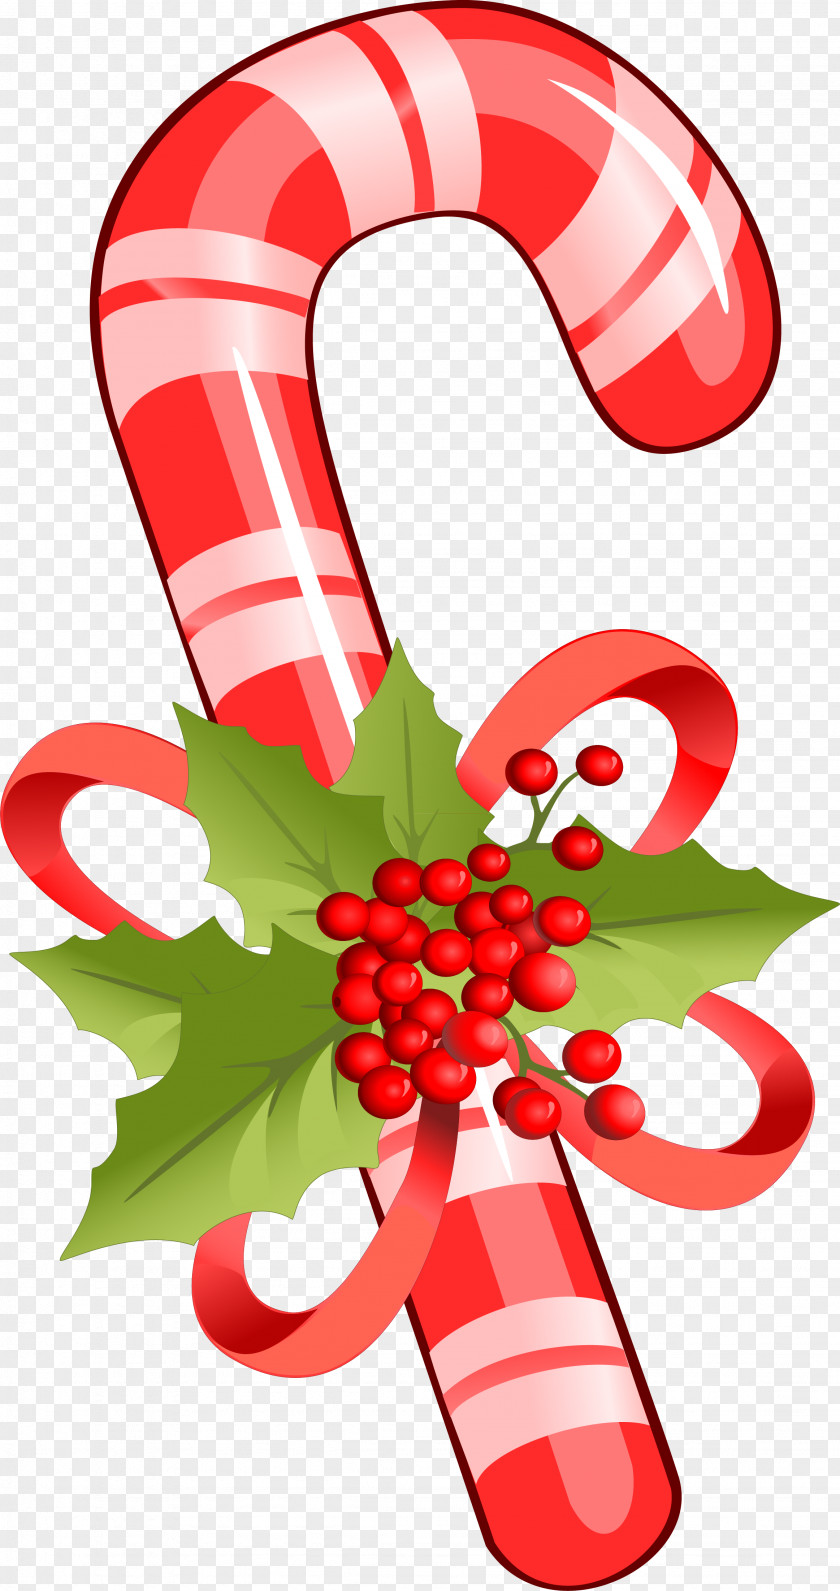 Lollipop Candy Cane Stick Ribbon Clip Art Christmas PNG